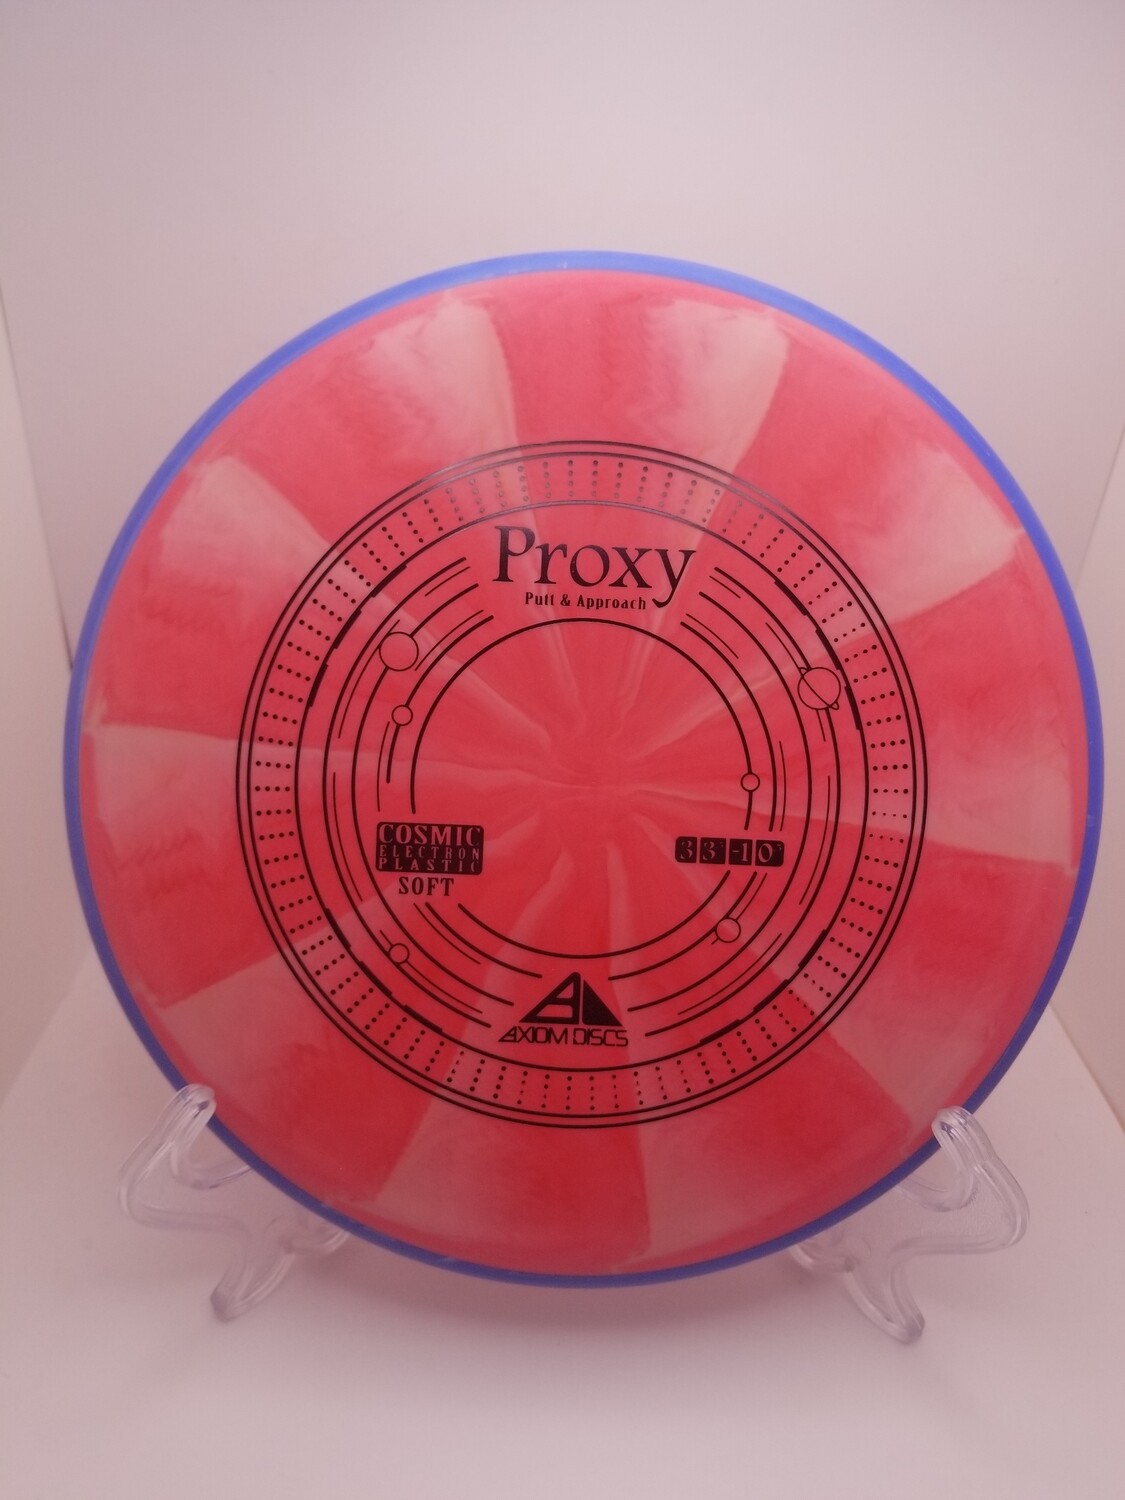 Axiom Discs Proxy Red Swirl with Blue Rim Cosmic Electron Plastic Soft 172g